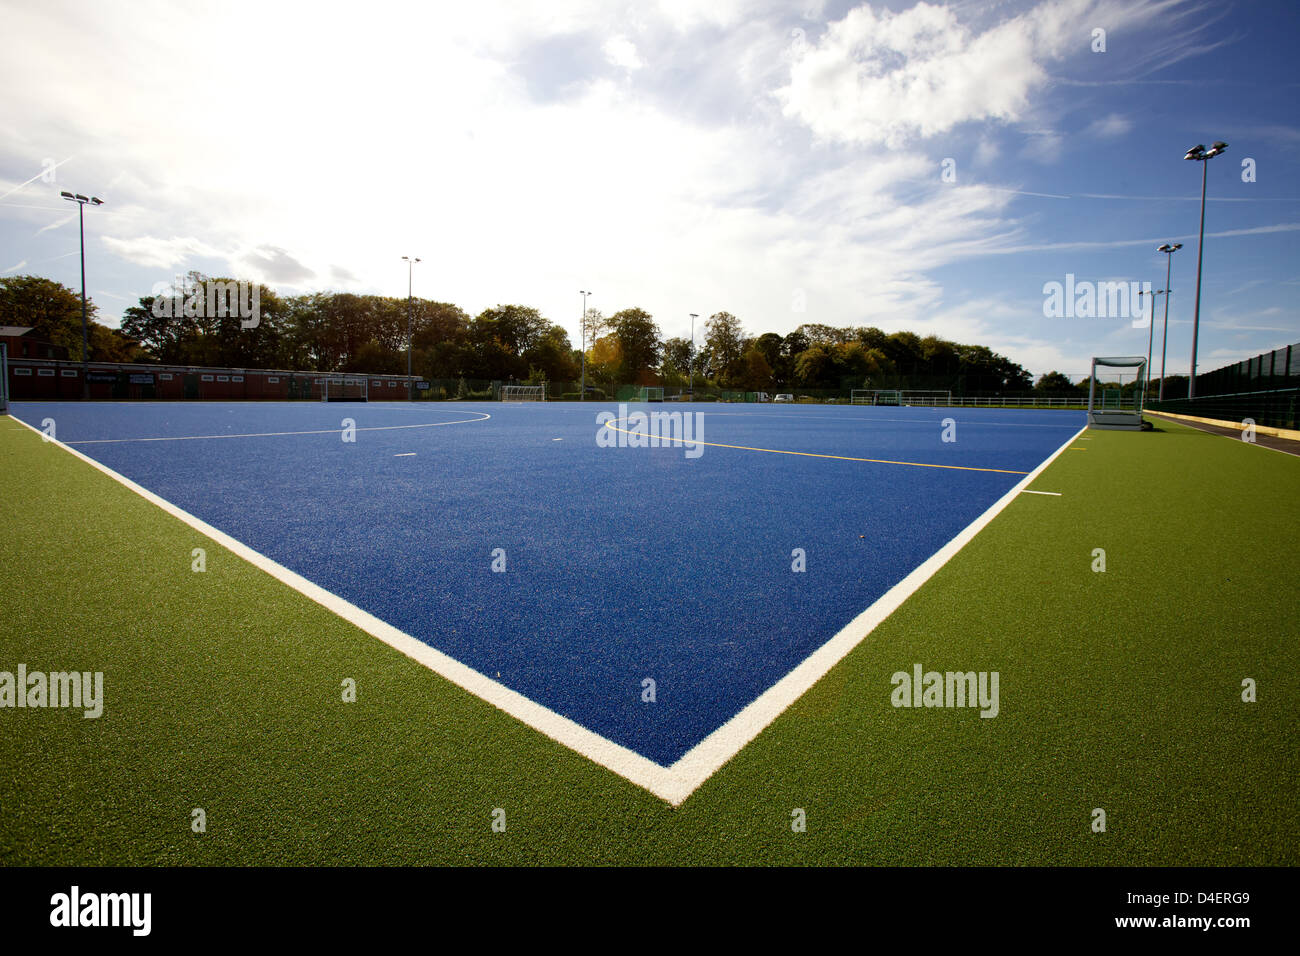 Hockey pitch image by Vicky Matthers/iconphotomedia Stock Photo